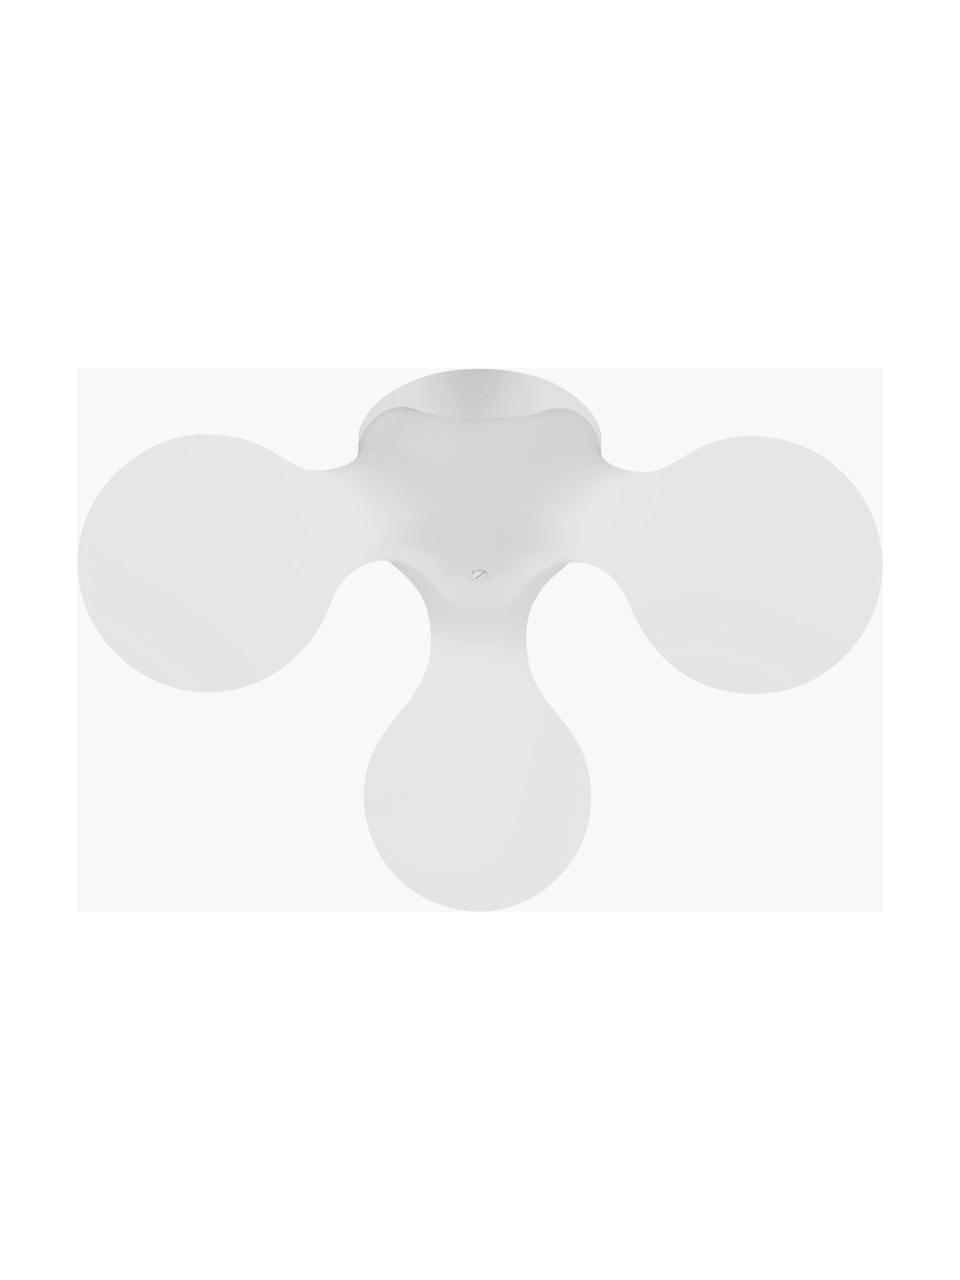 Dimmbare Wandleuchte Atomium, Lampenschirm: Kunststoff, Weiß, B 64 x H 30 cm